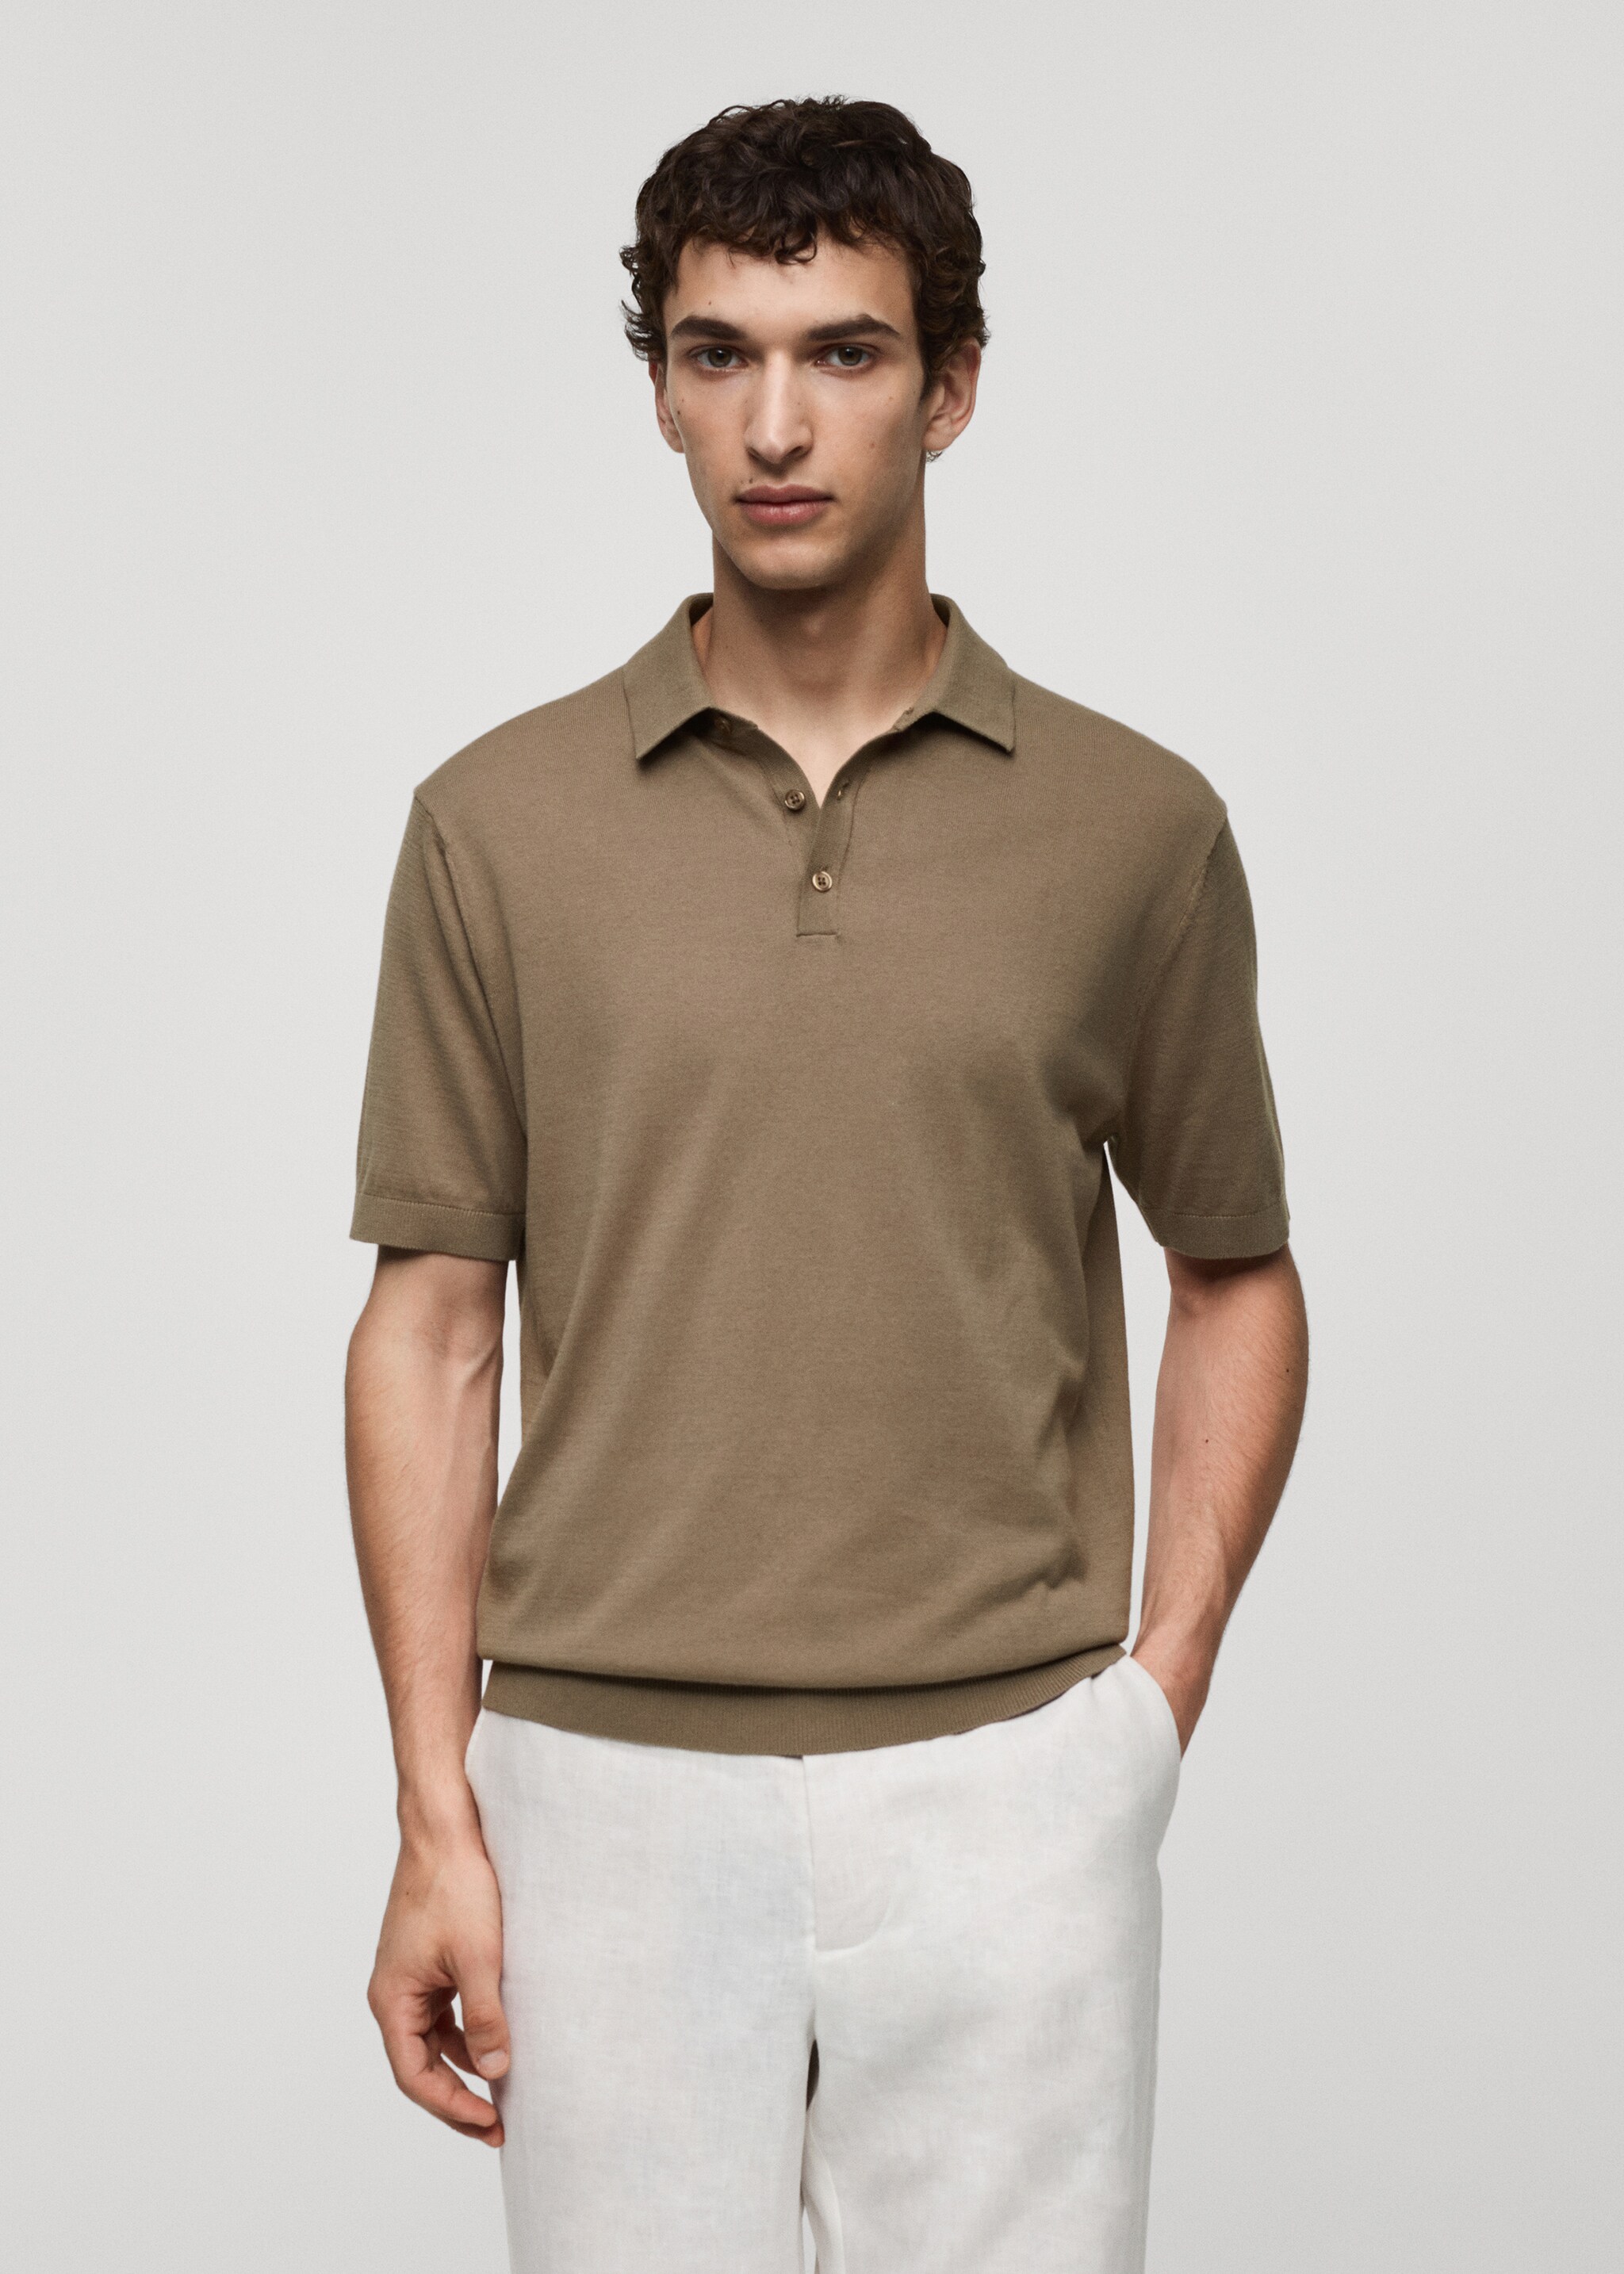 100% cotton knitted polo shirt - Medium plane